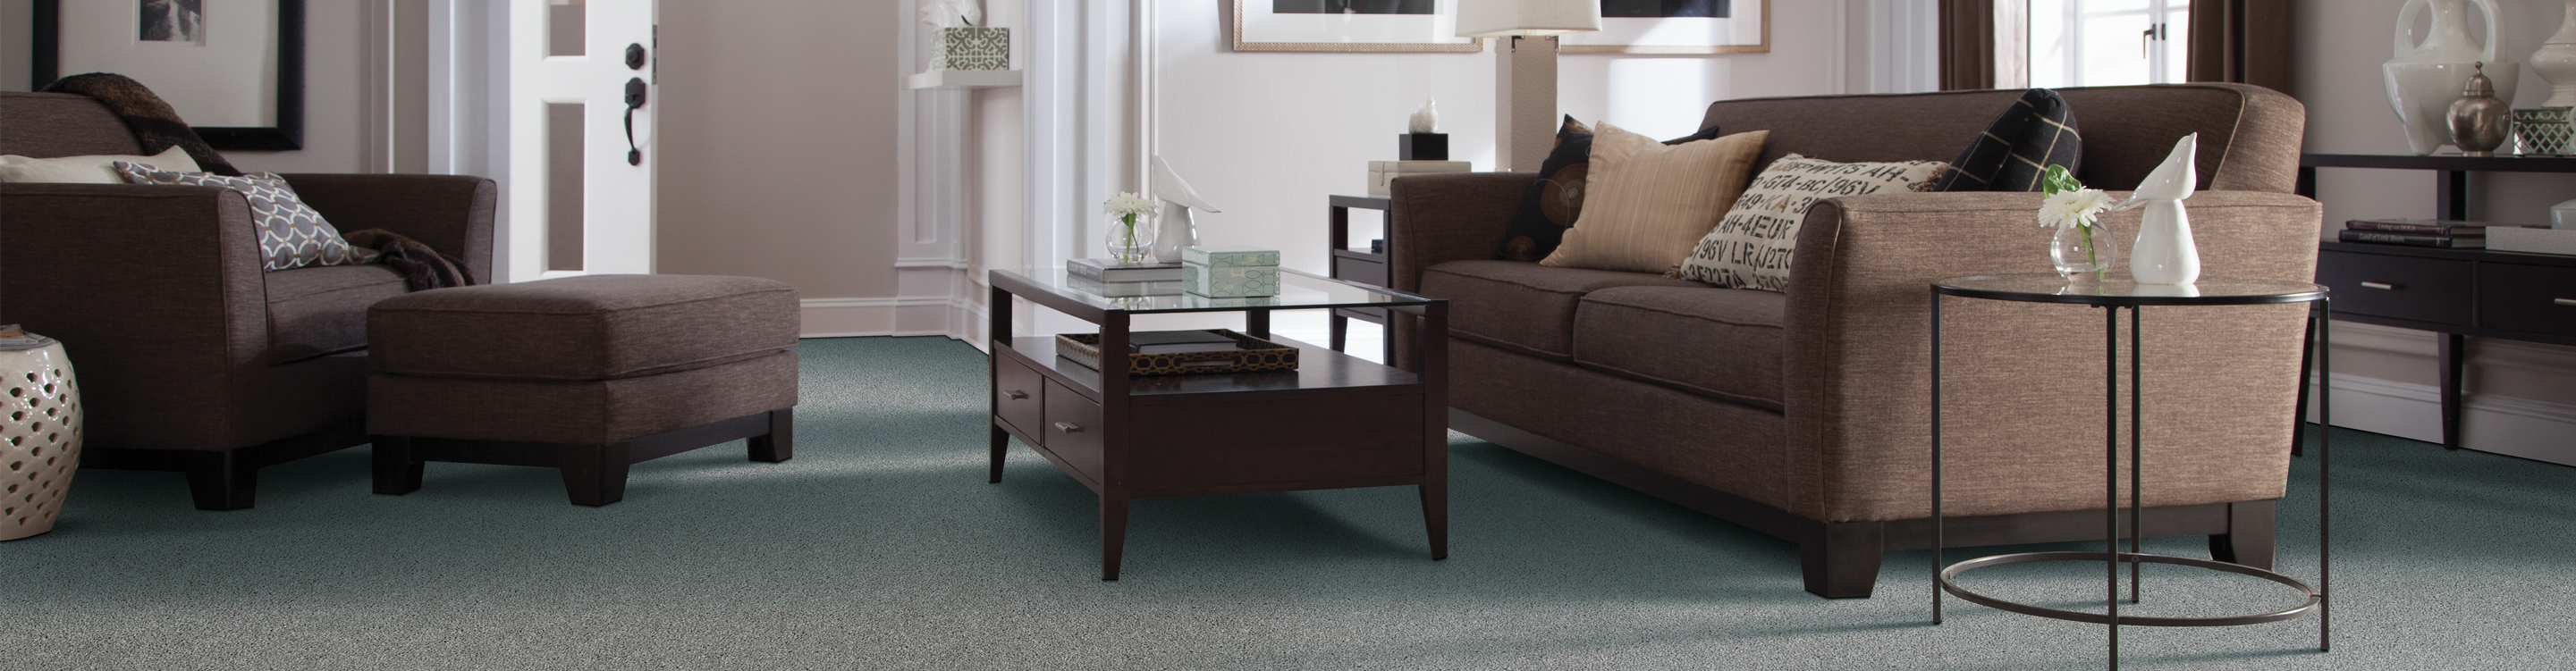 green grey carpet in living room